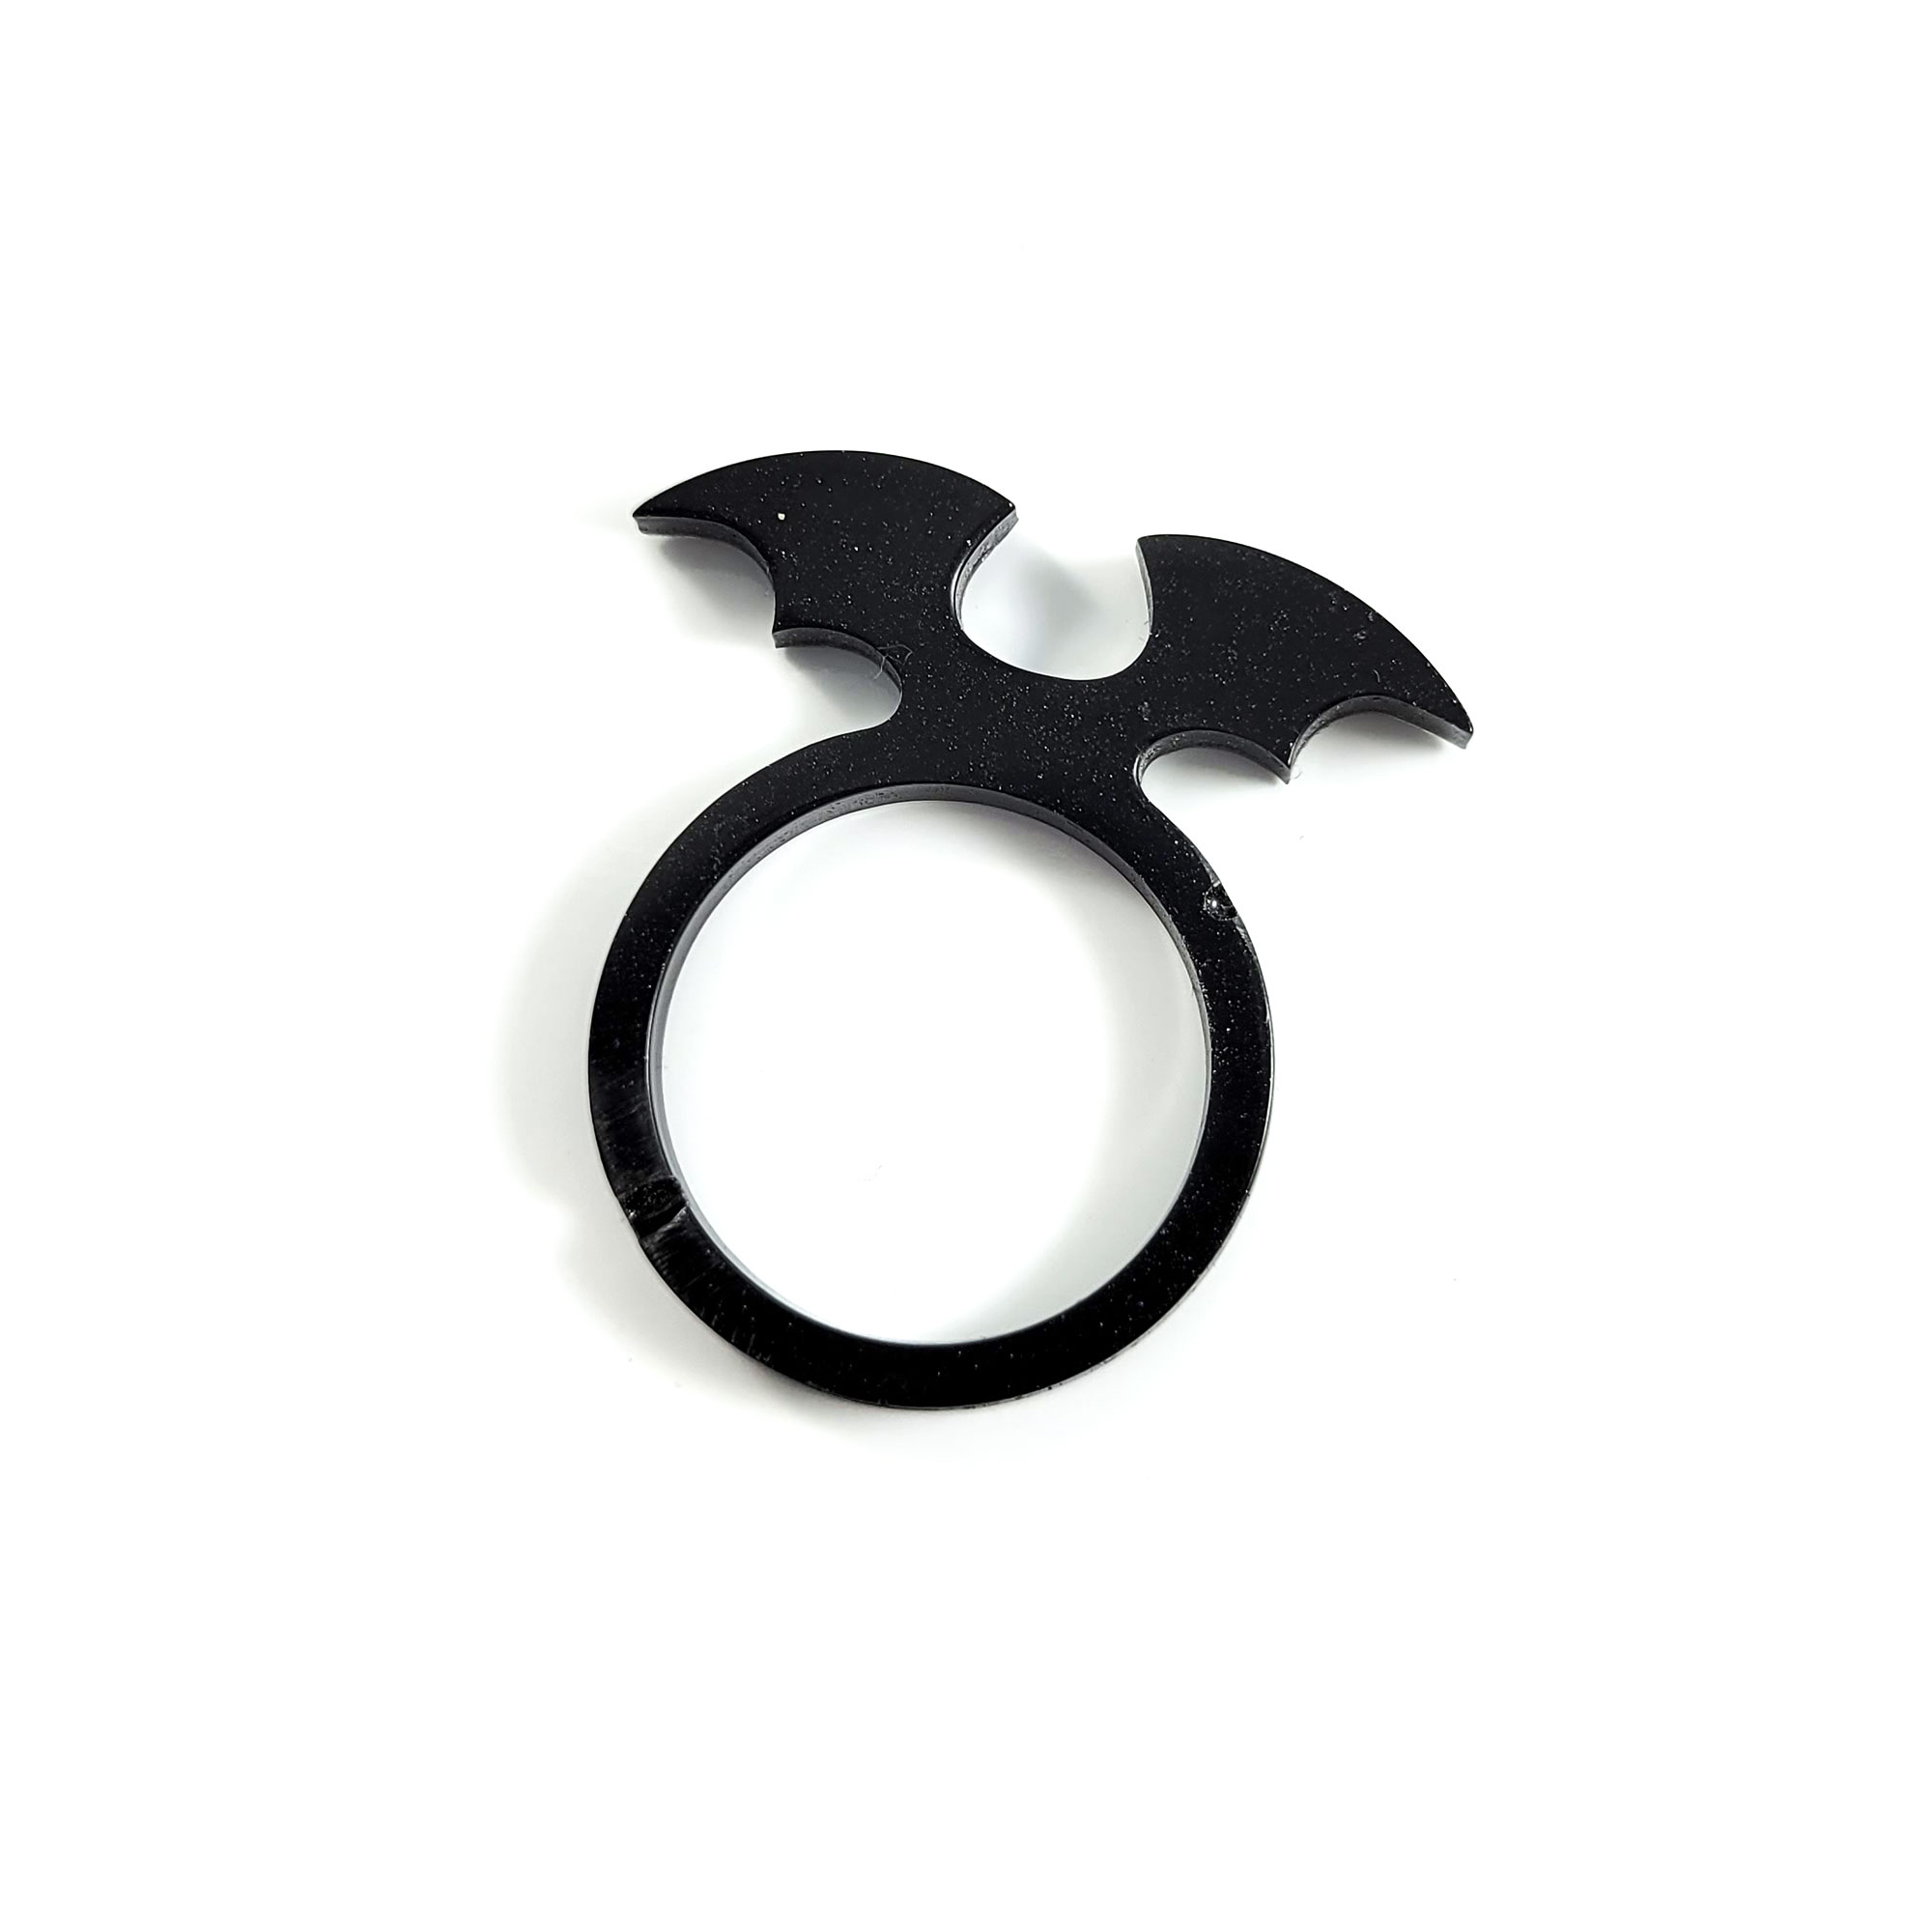 Glittery Black Bat Wing Ring by Wilde Designs